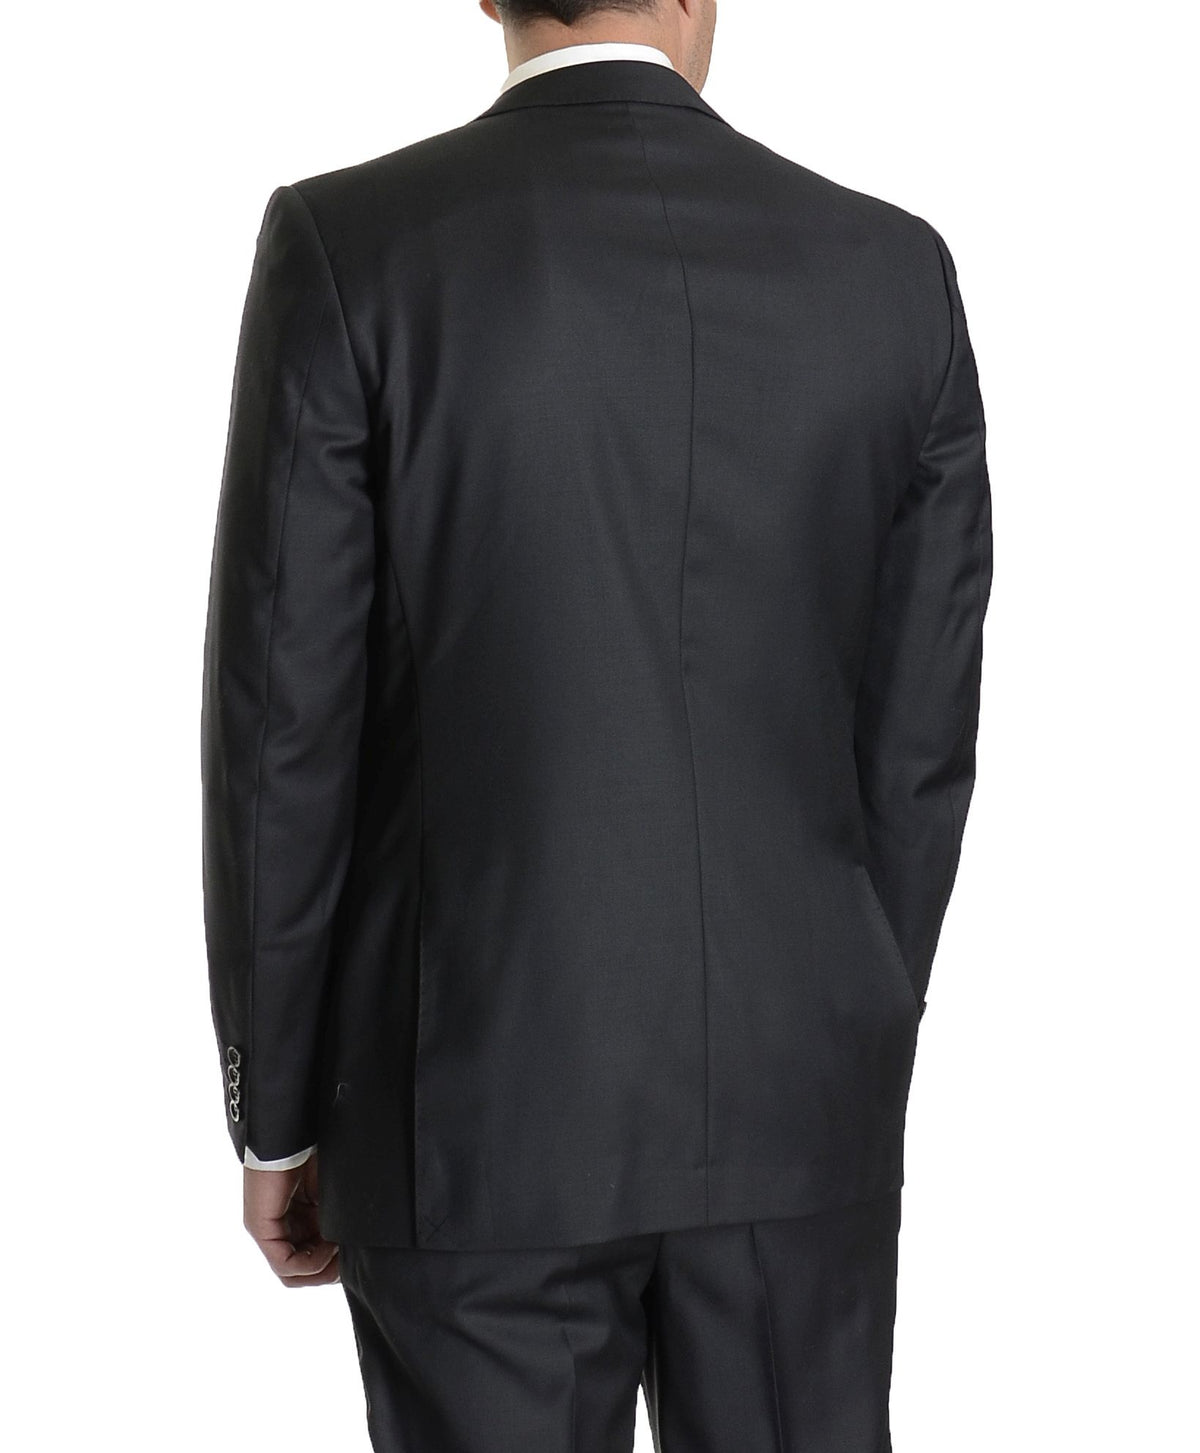 Mens Solid Black Regular Fit 100% Super 150s Wool Suit